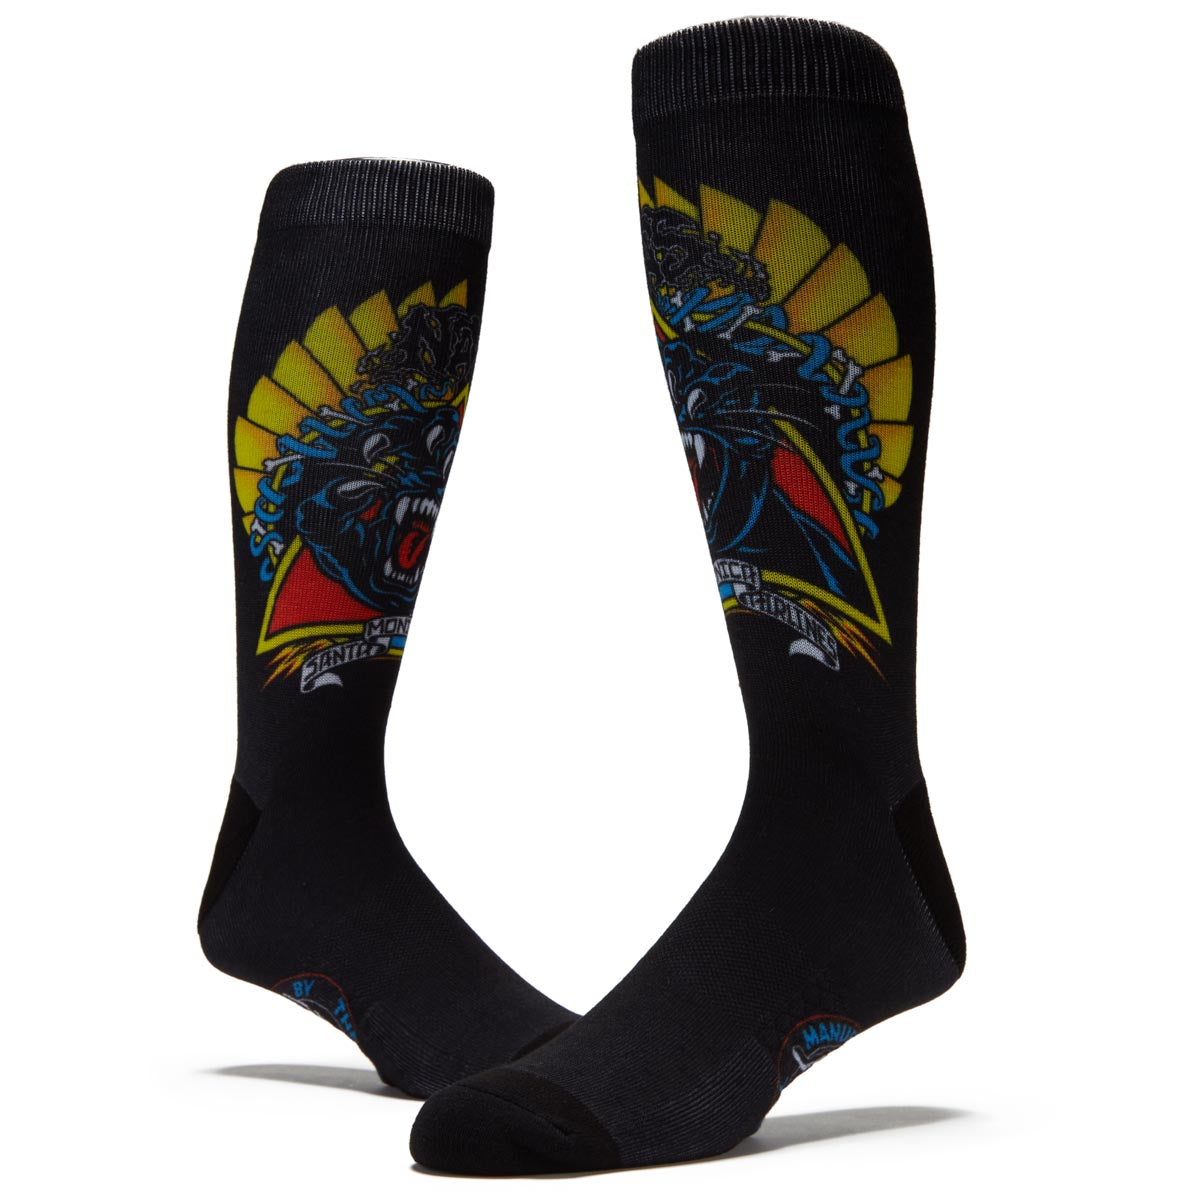 Santa Cruz Natas Screaming Panther Dress Socks - Black image 2